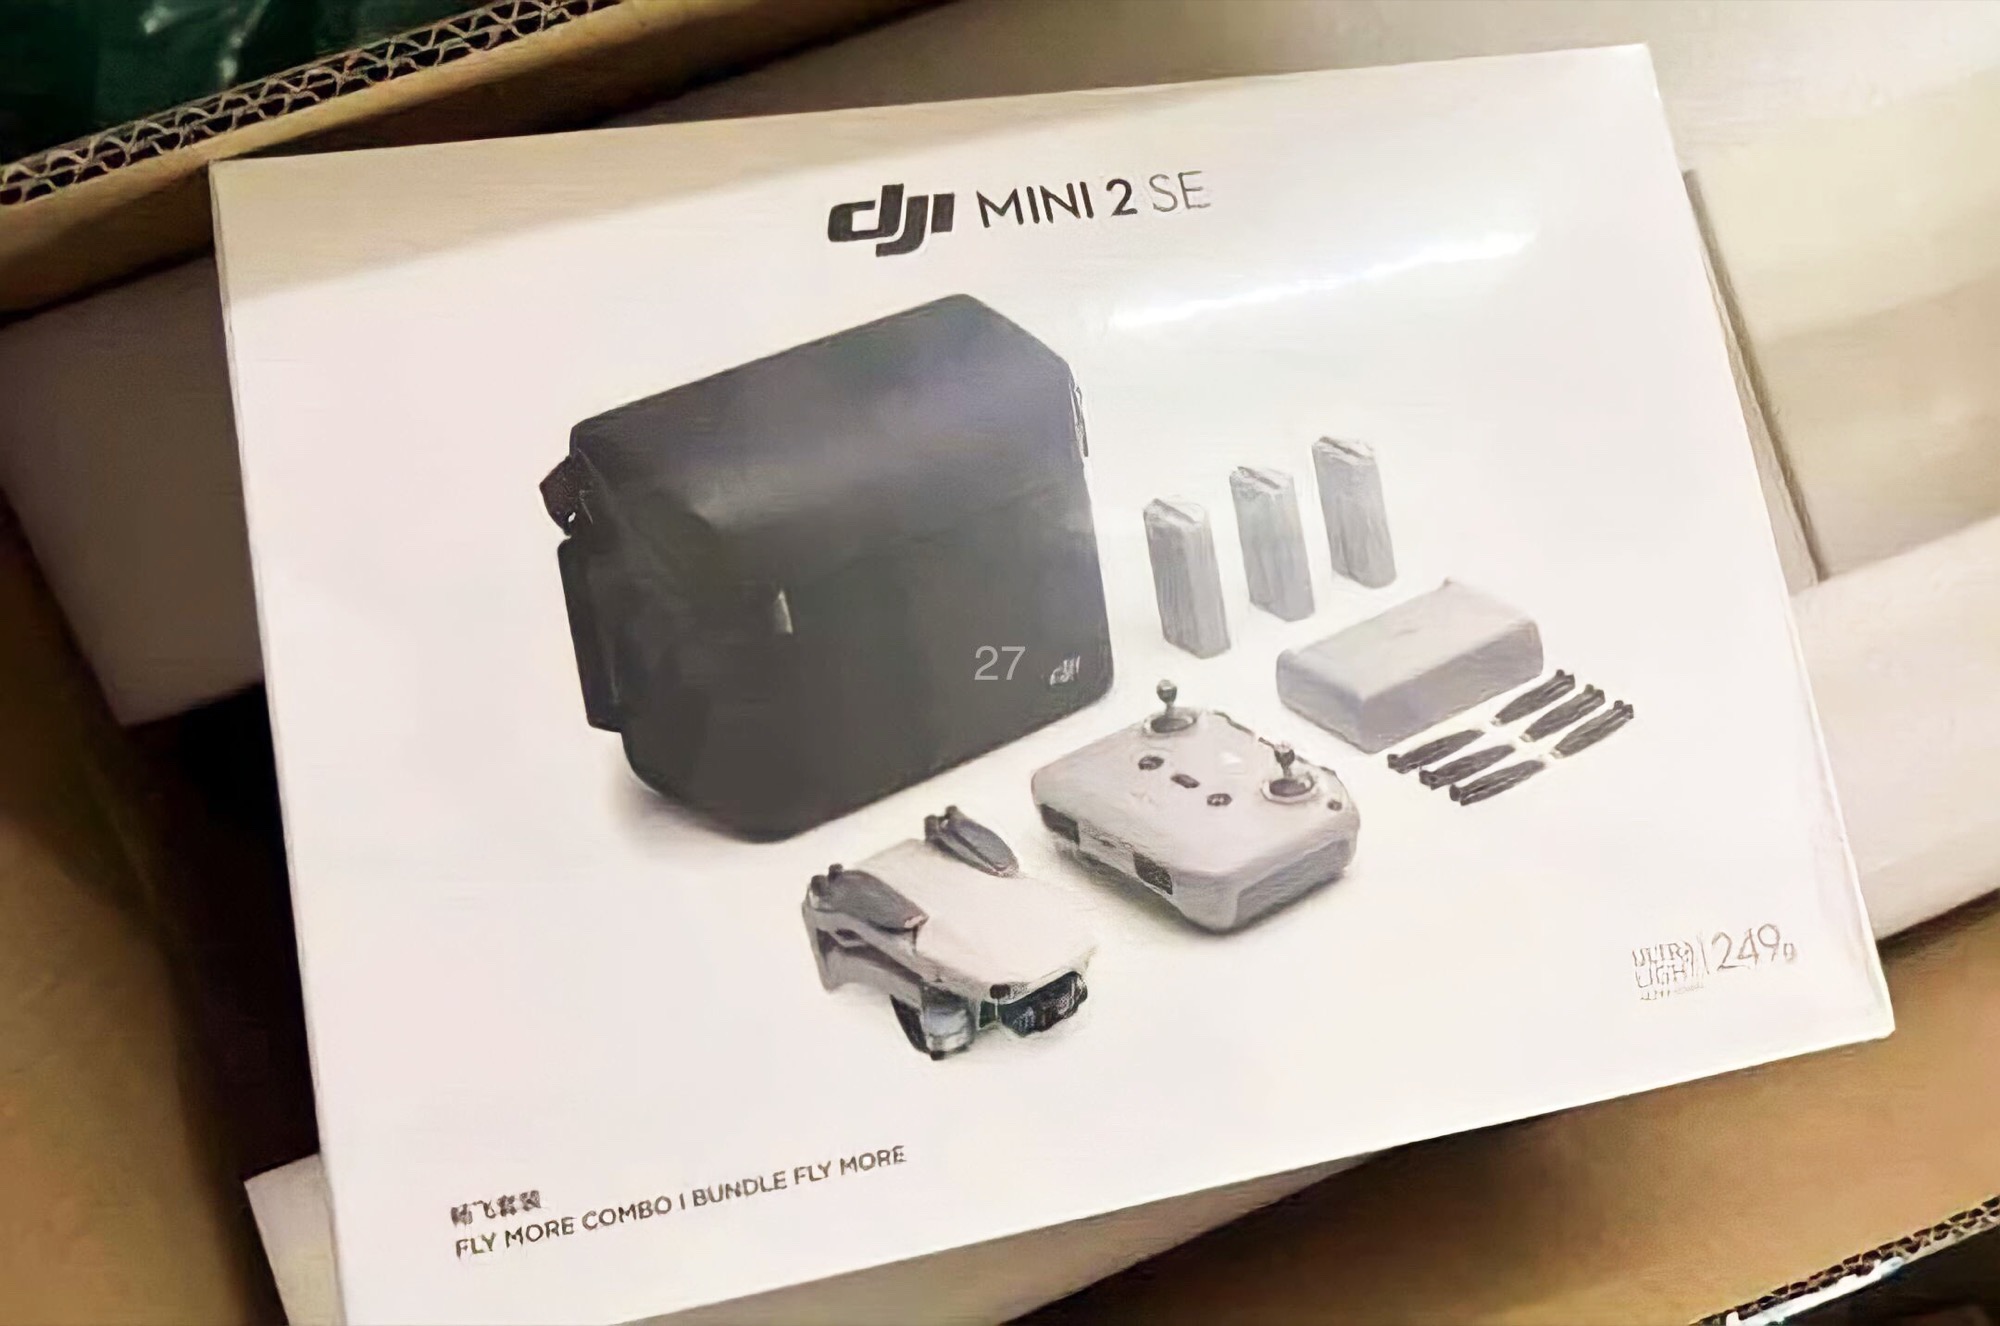 DJI Mini 2 SE: Leak reveals specifications including 31 minutes